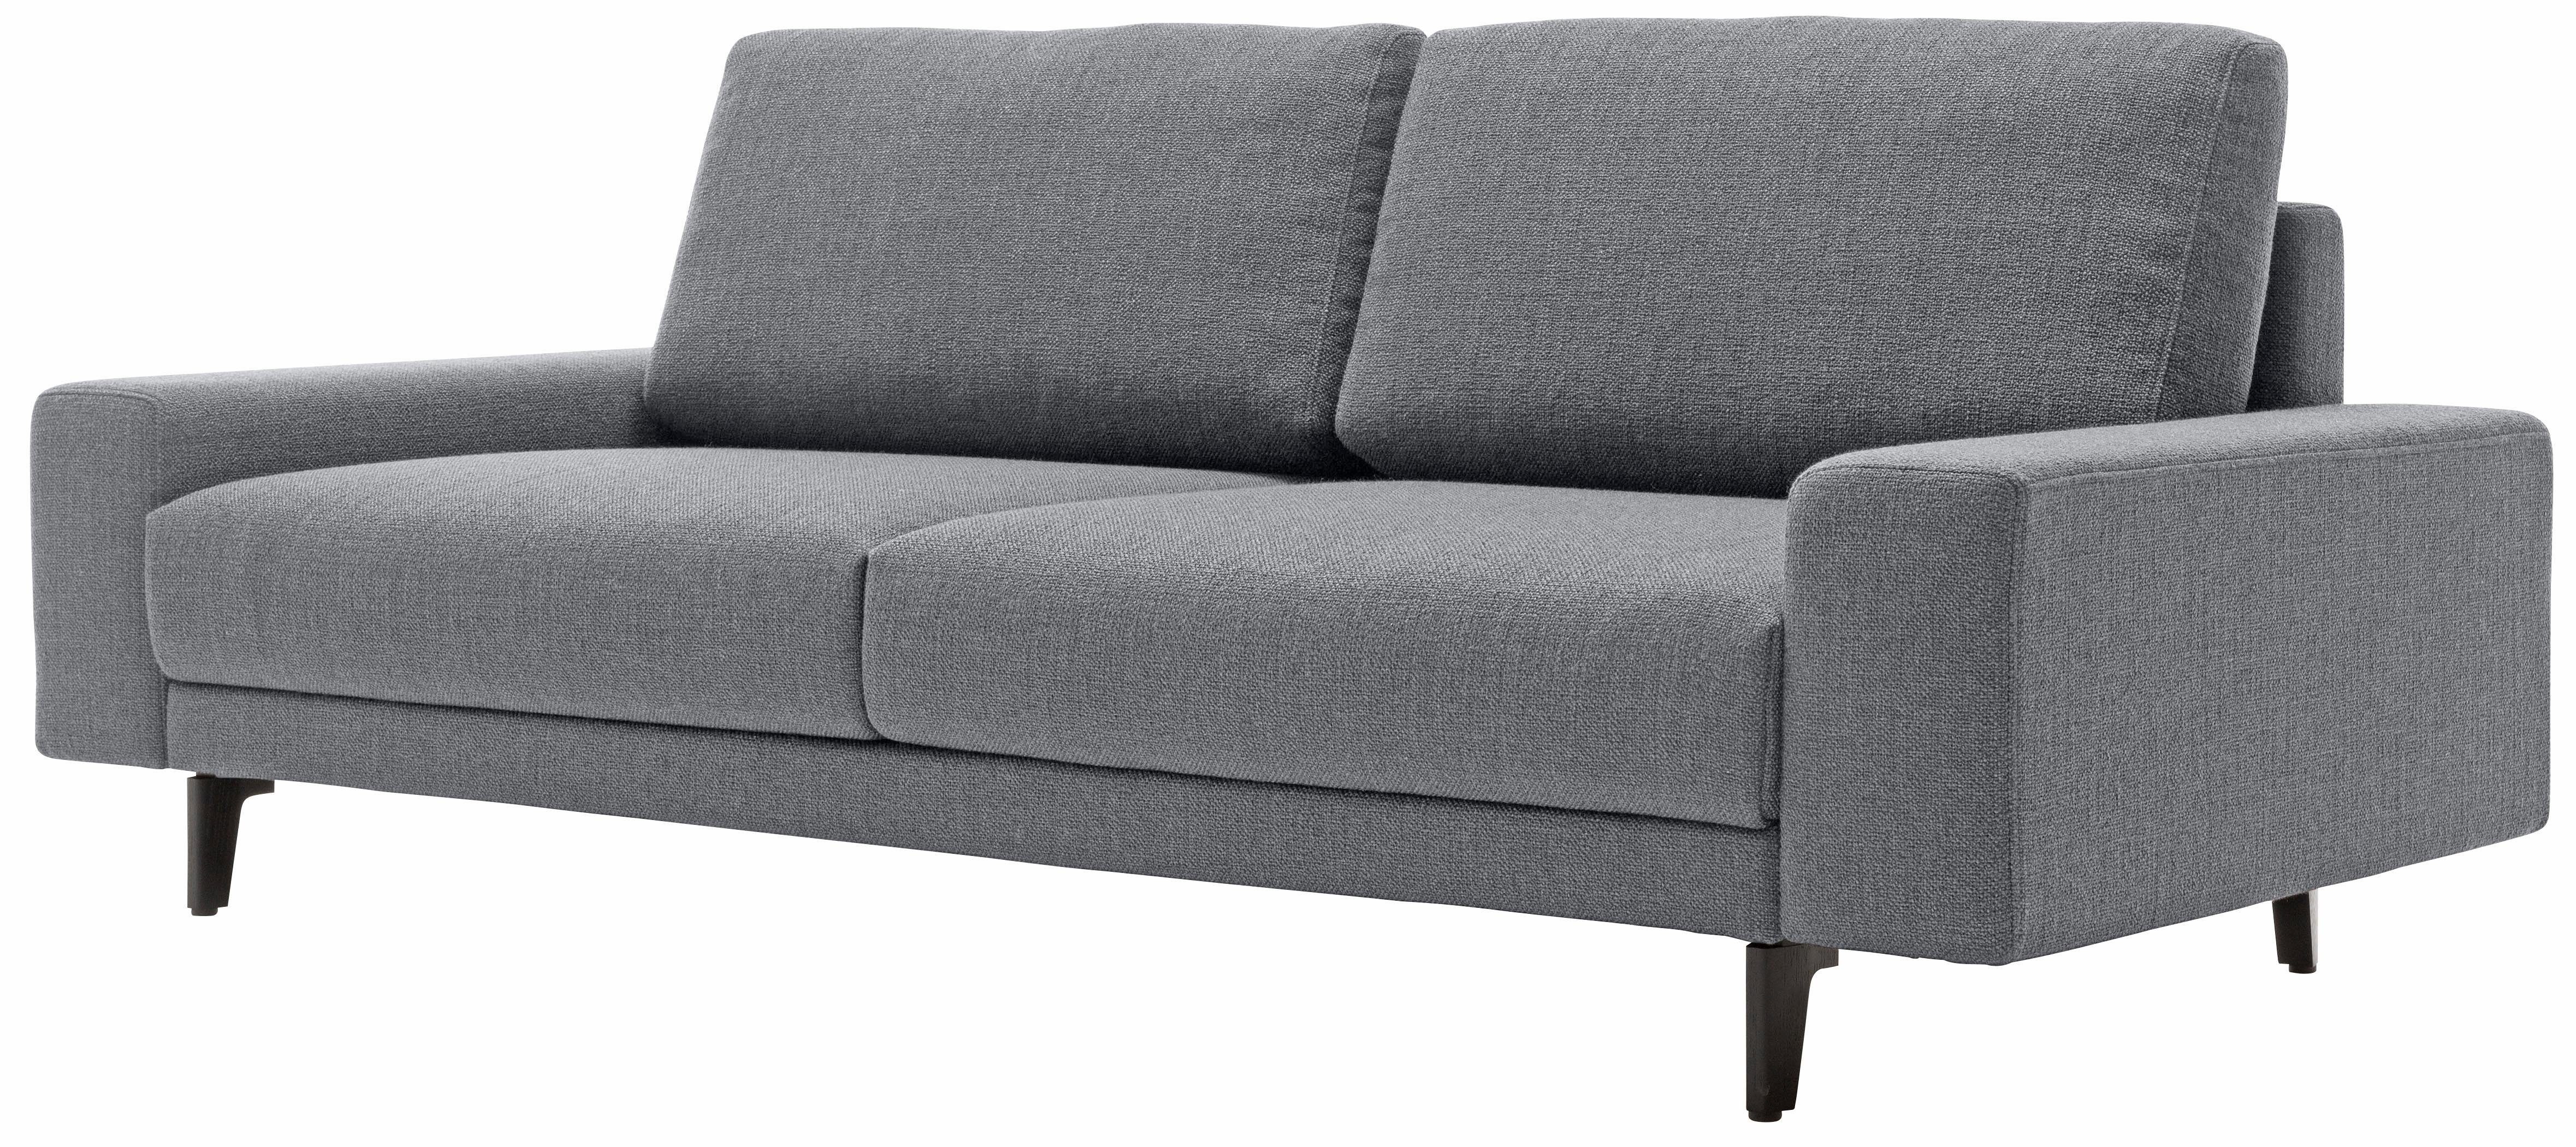 hülsta sofa 2-Sitzer hs.450, Armlehne breit niedrig, Alugussfüße in umbragrau, Breite 180 cm